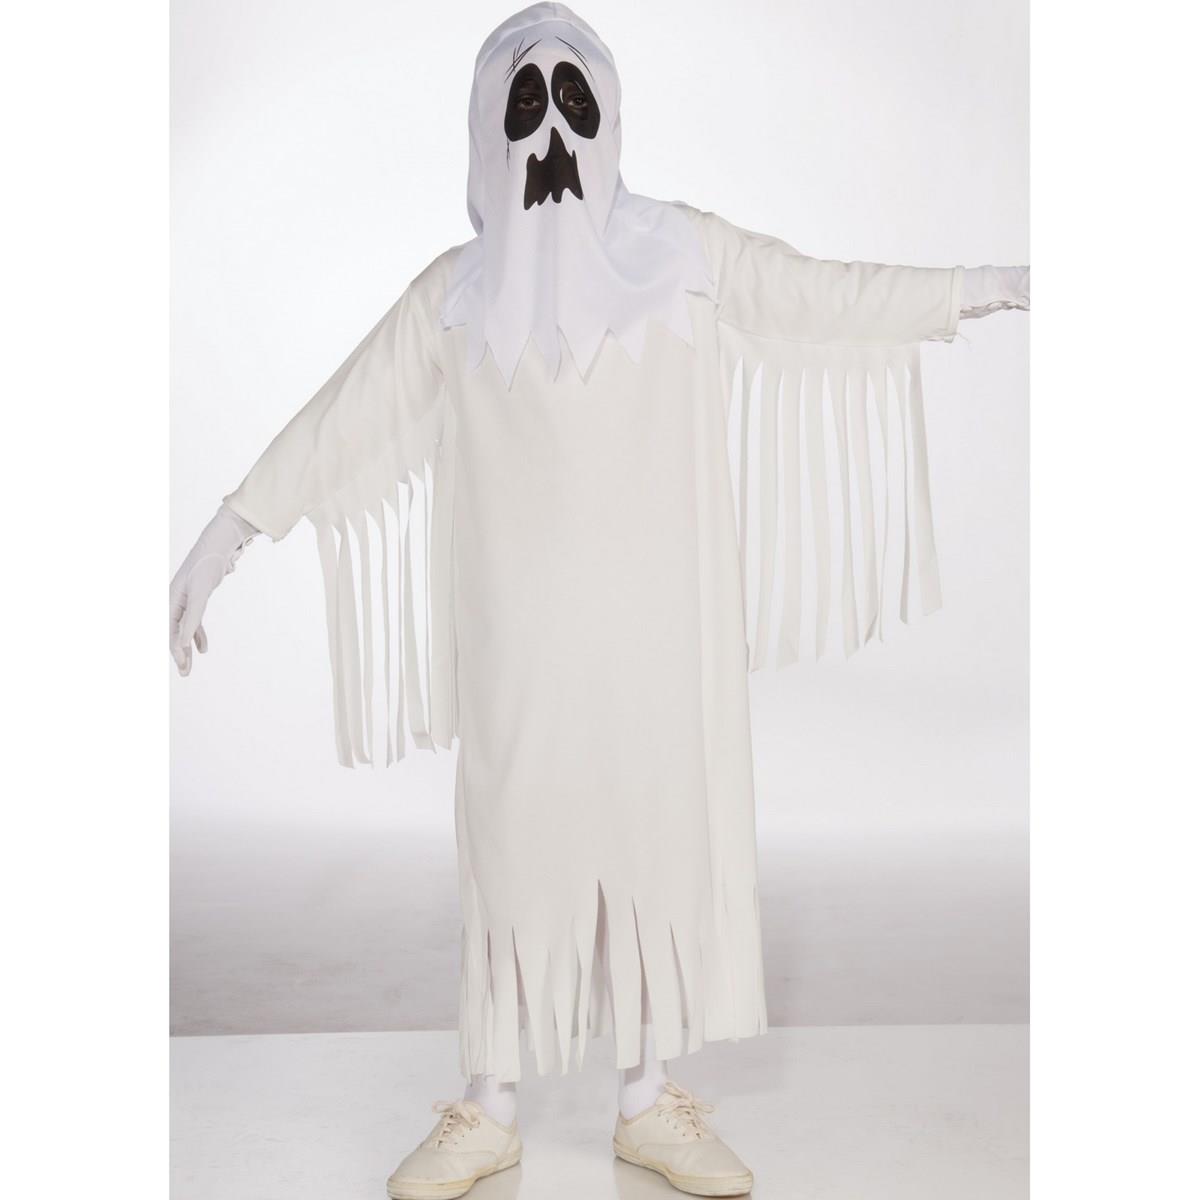 Picture of Forum Novelties Costumes 277218 Child Ghost Costume, Medium